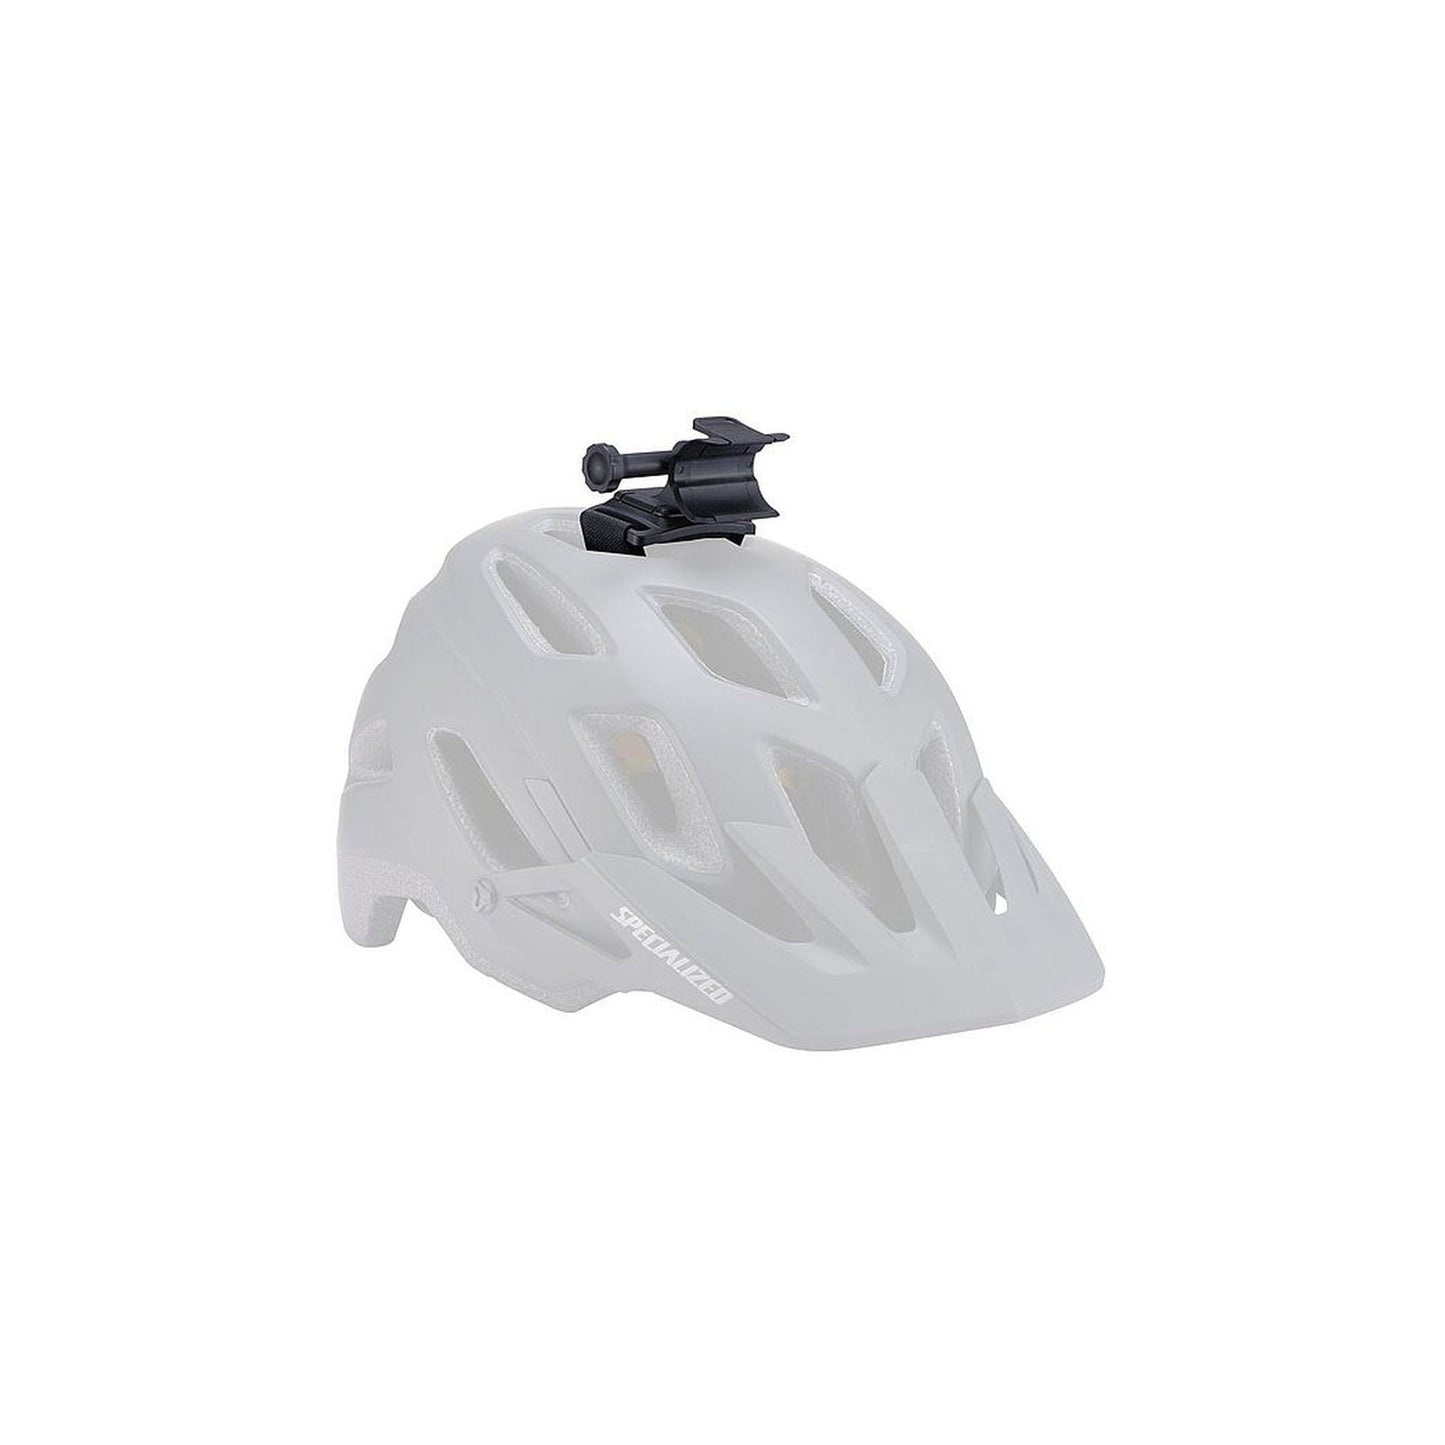 Fluxª 900/1200 Headlight Helmet Mount-Cycles Direct Specialized